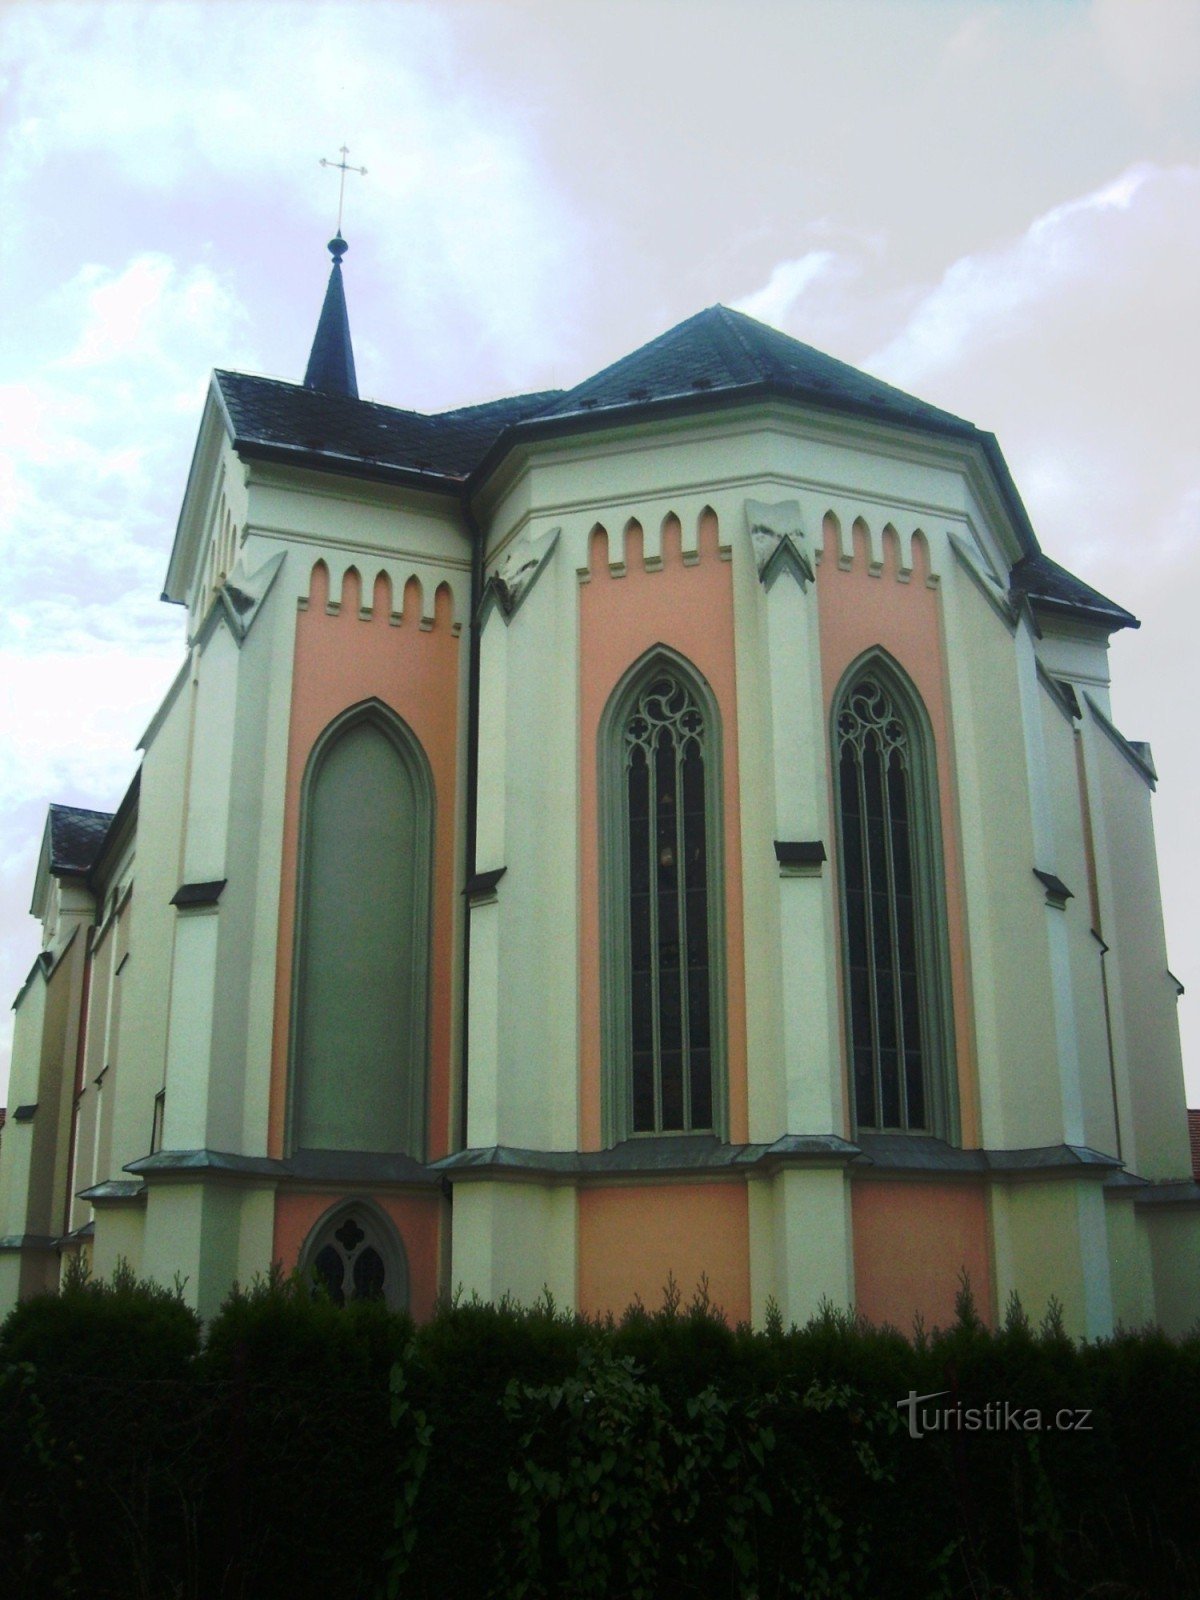 igreja em estilo neogótico